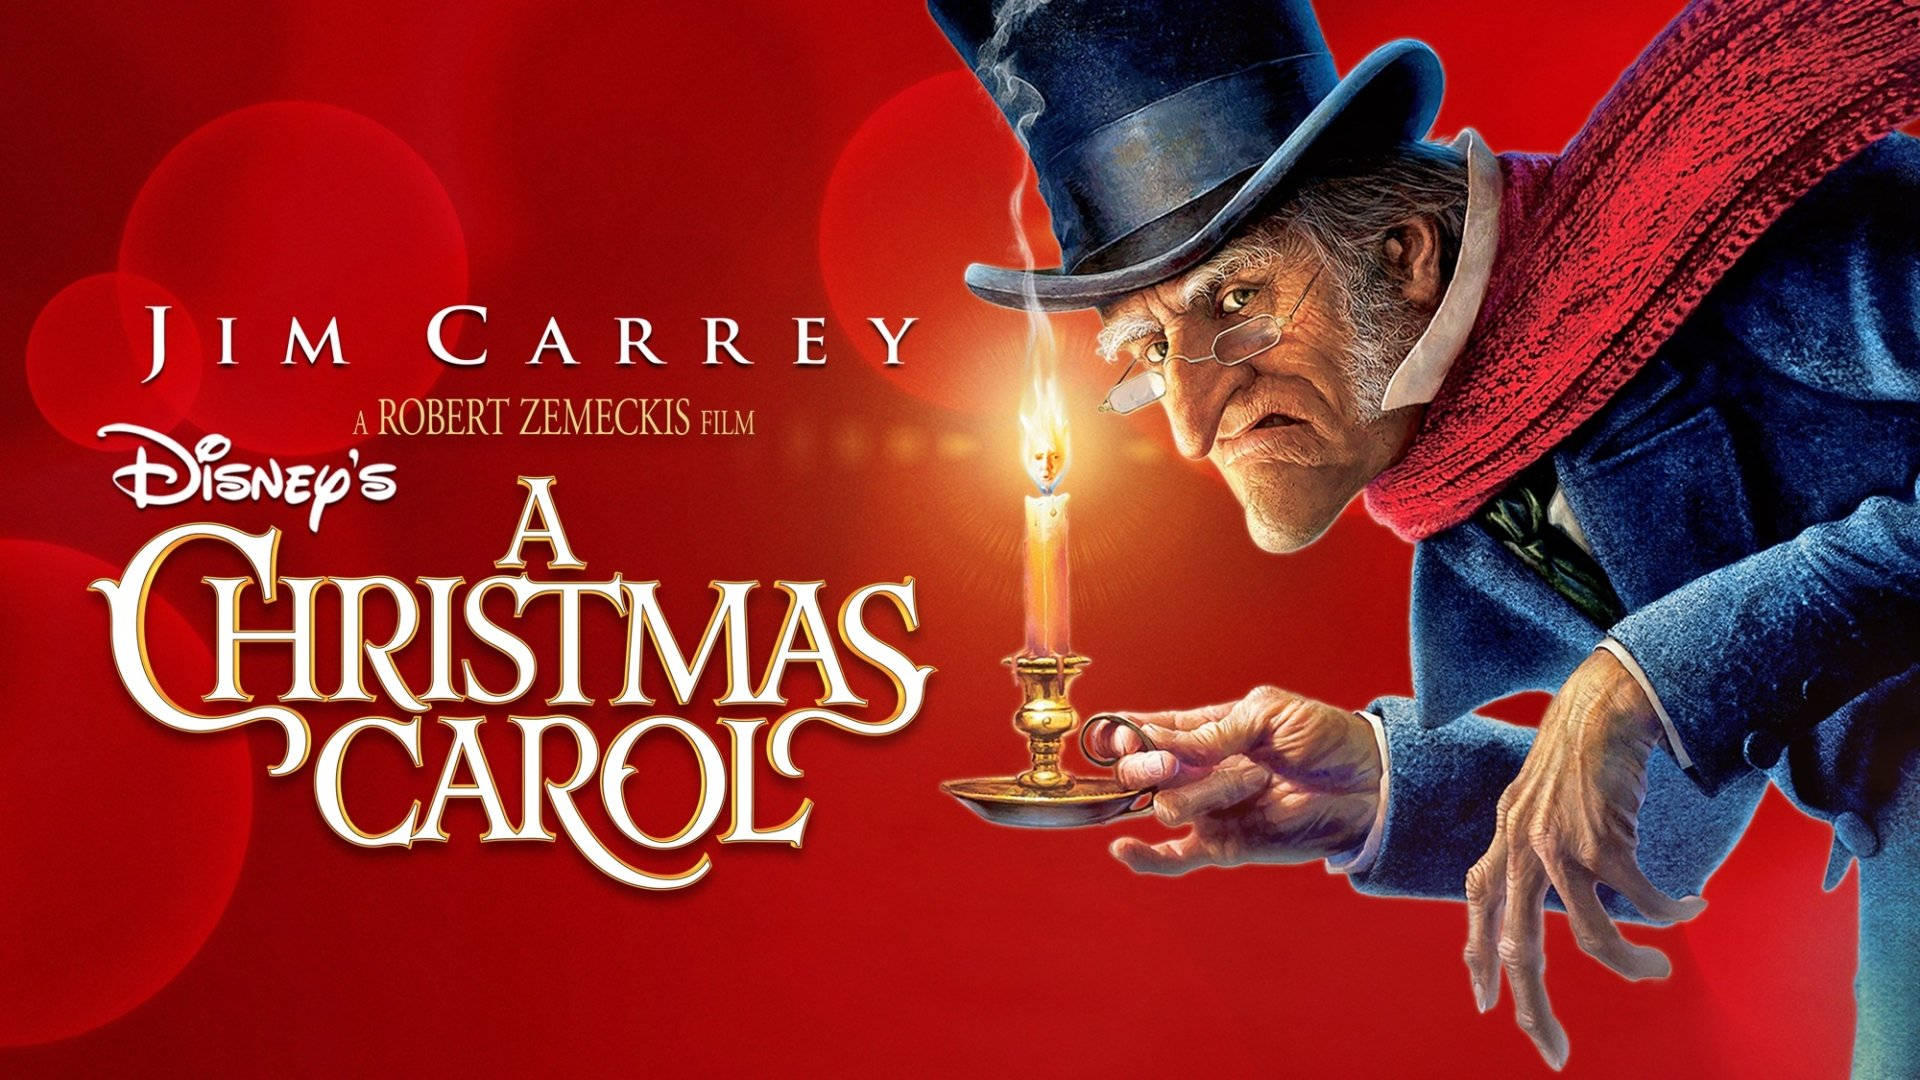 Jim Carrey A Christmas Carol